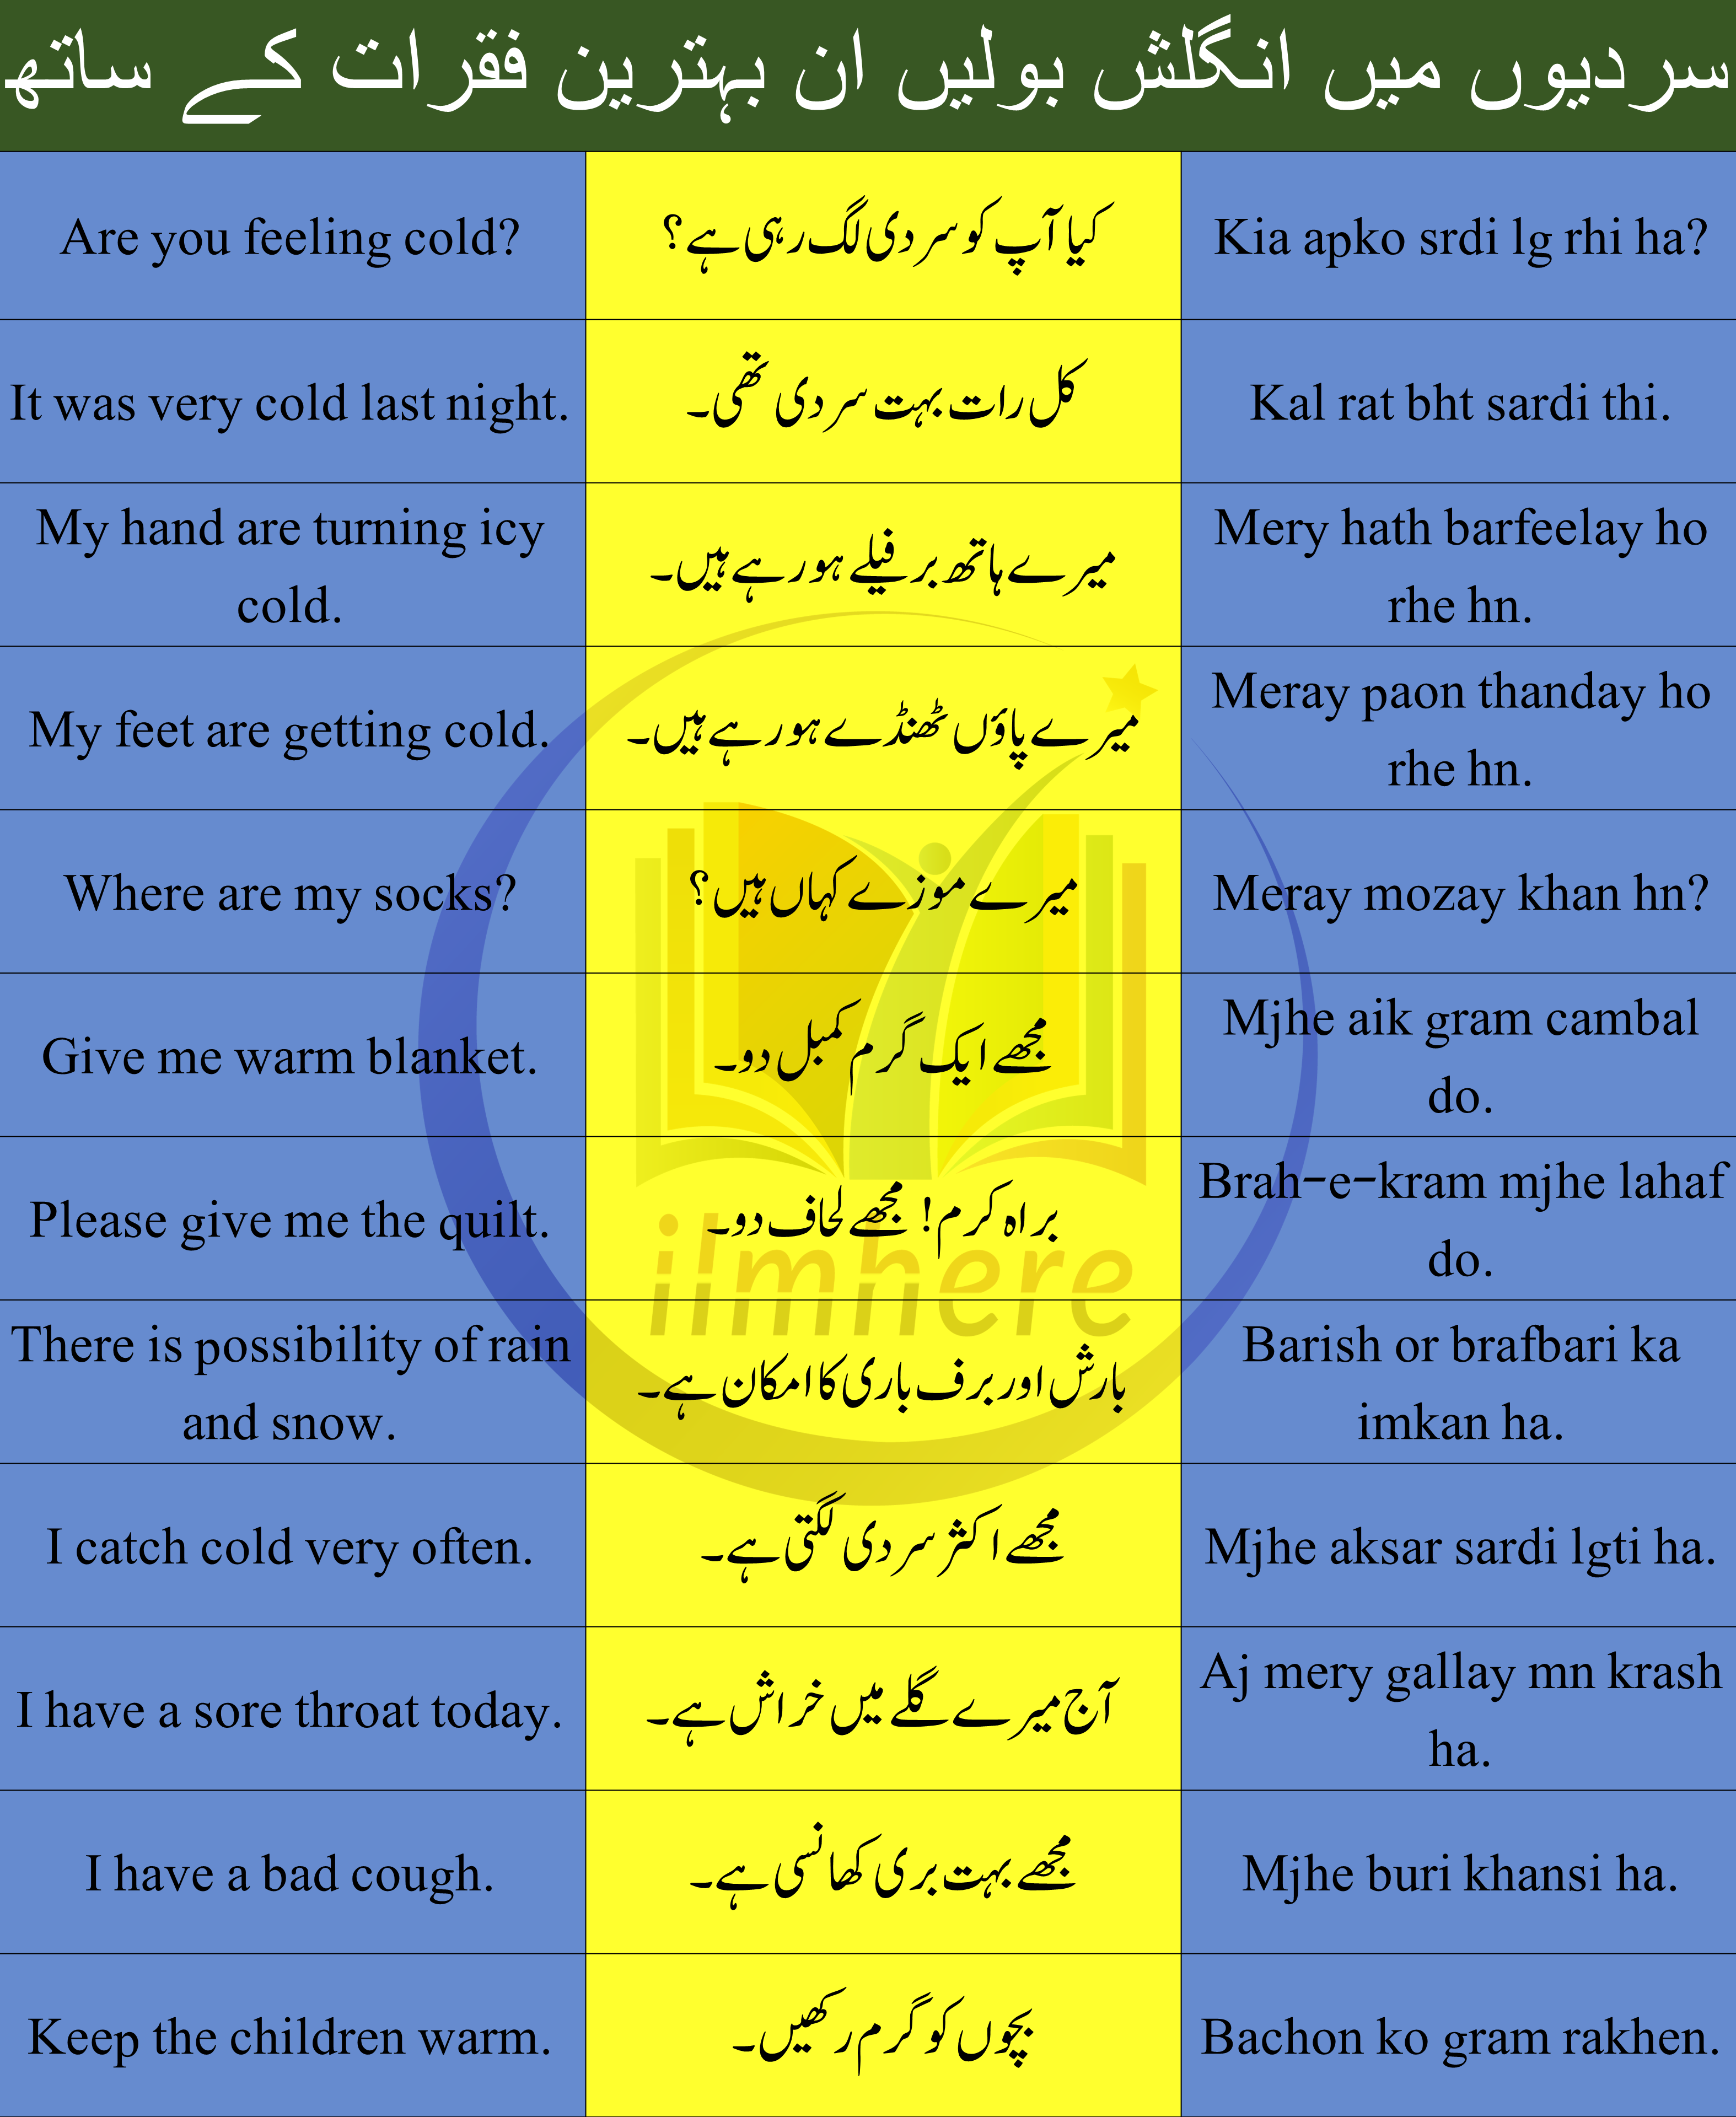 List 1 - English To Urdu Sentences For Winter Season